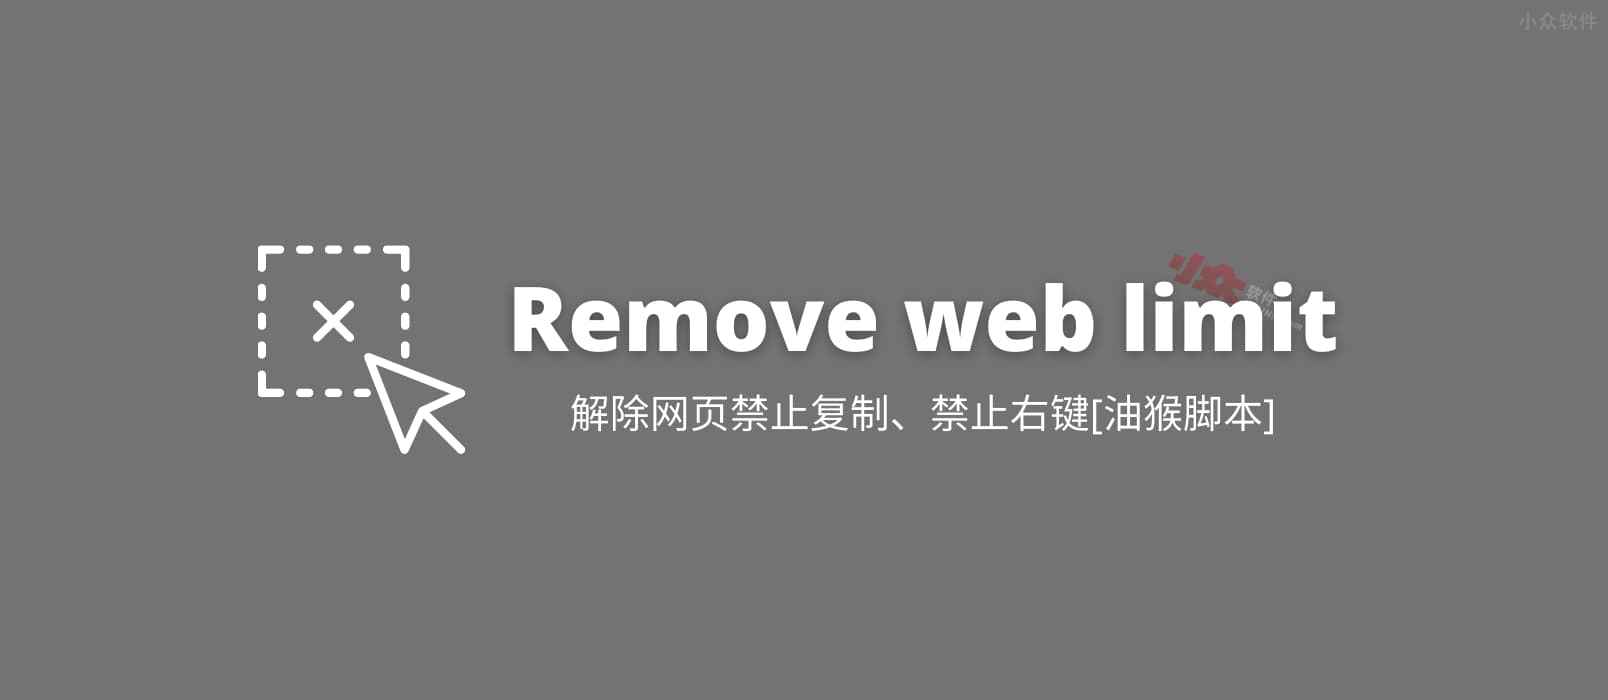 Remove web limits – 解除网页禁止复制限制、禁止右键限制[油猴脚本]